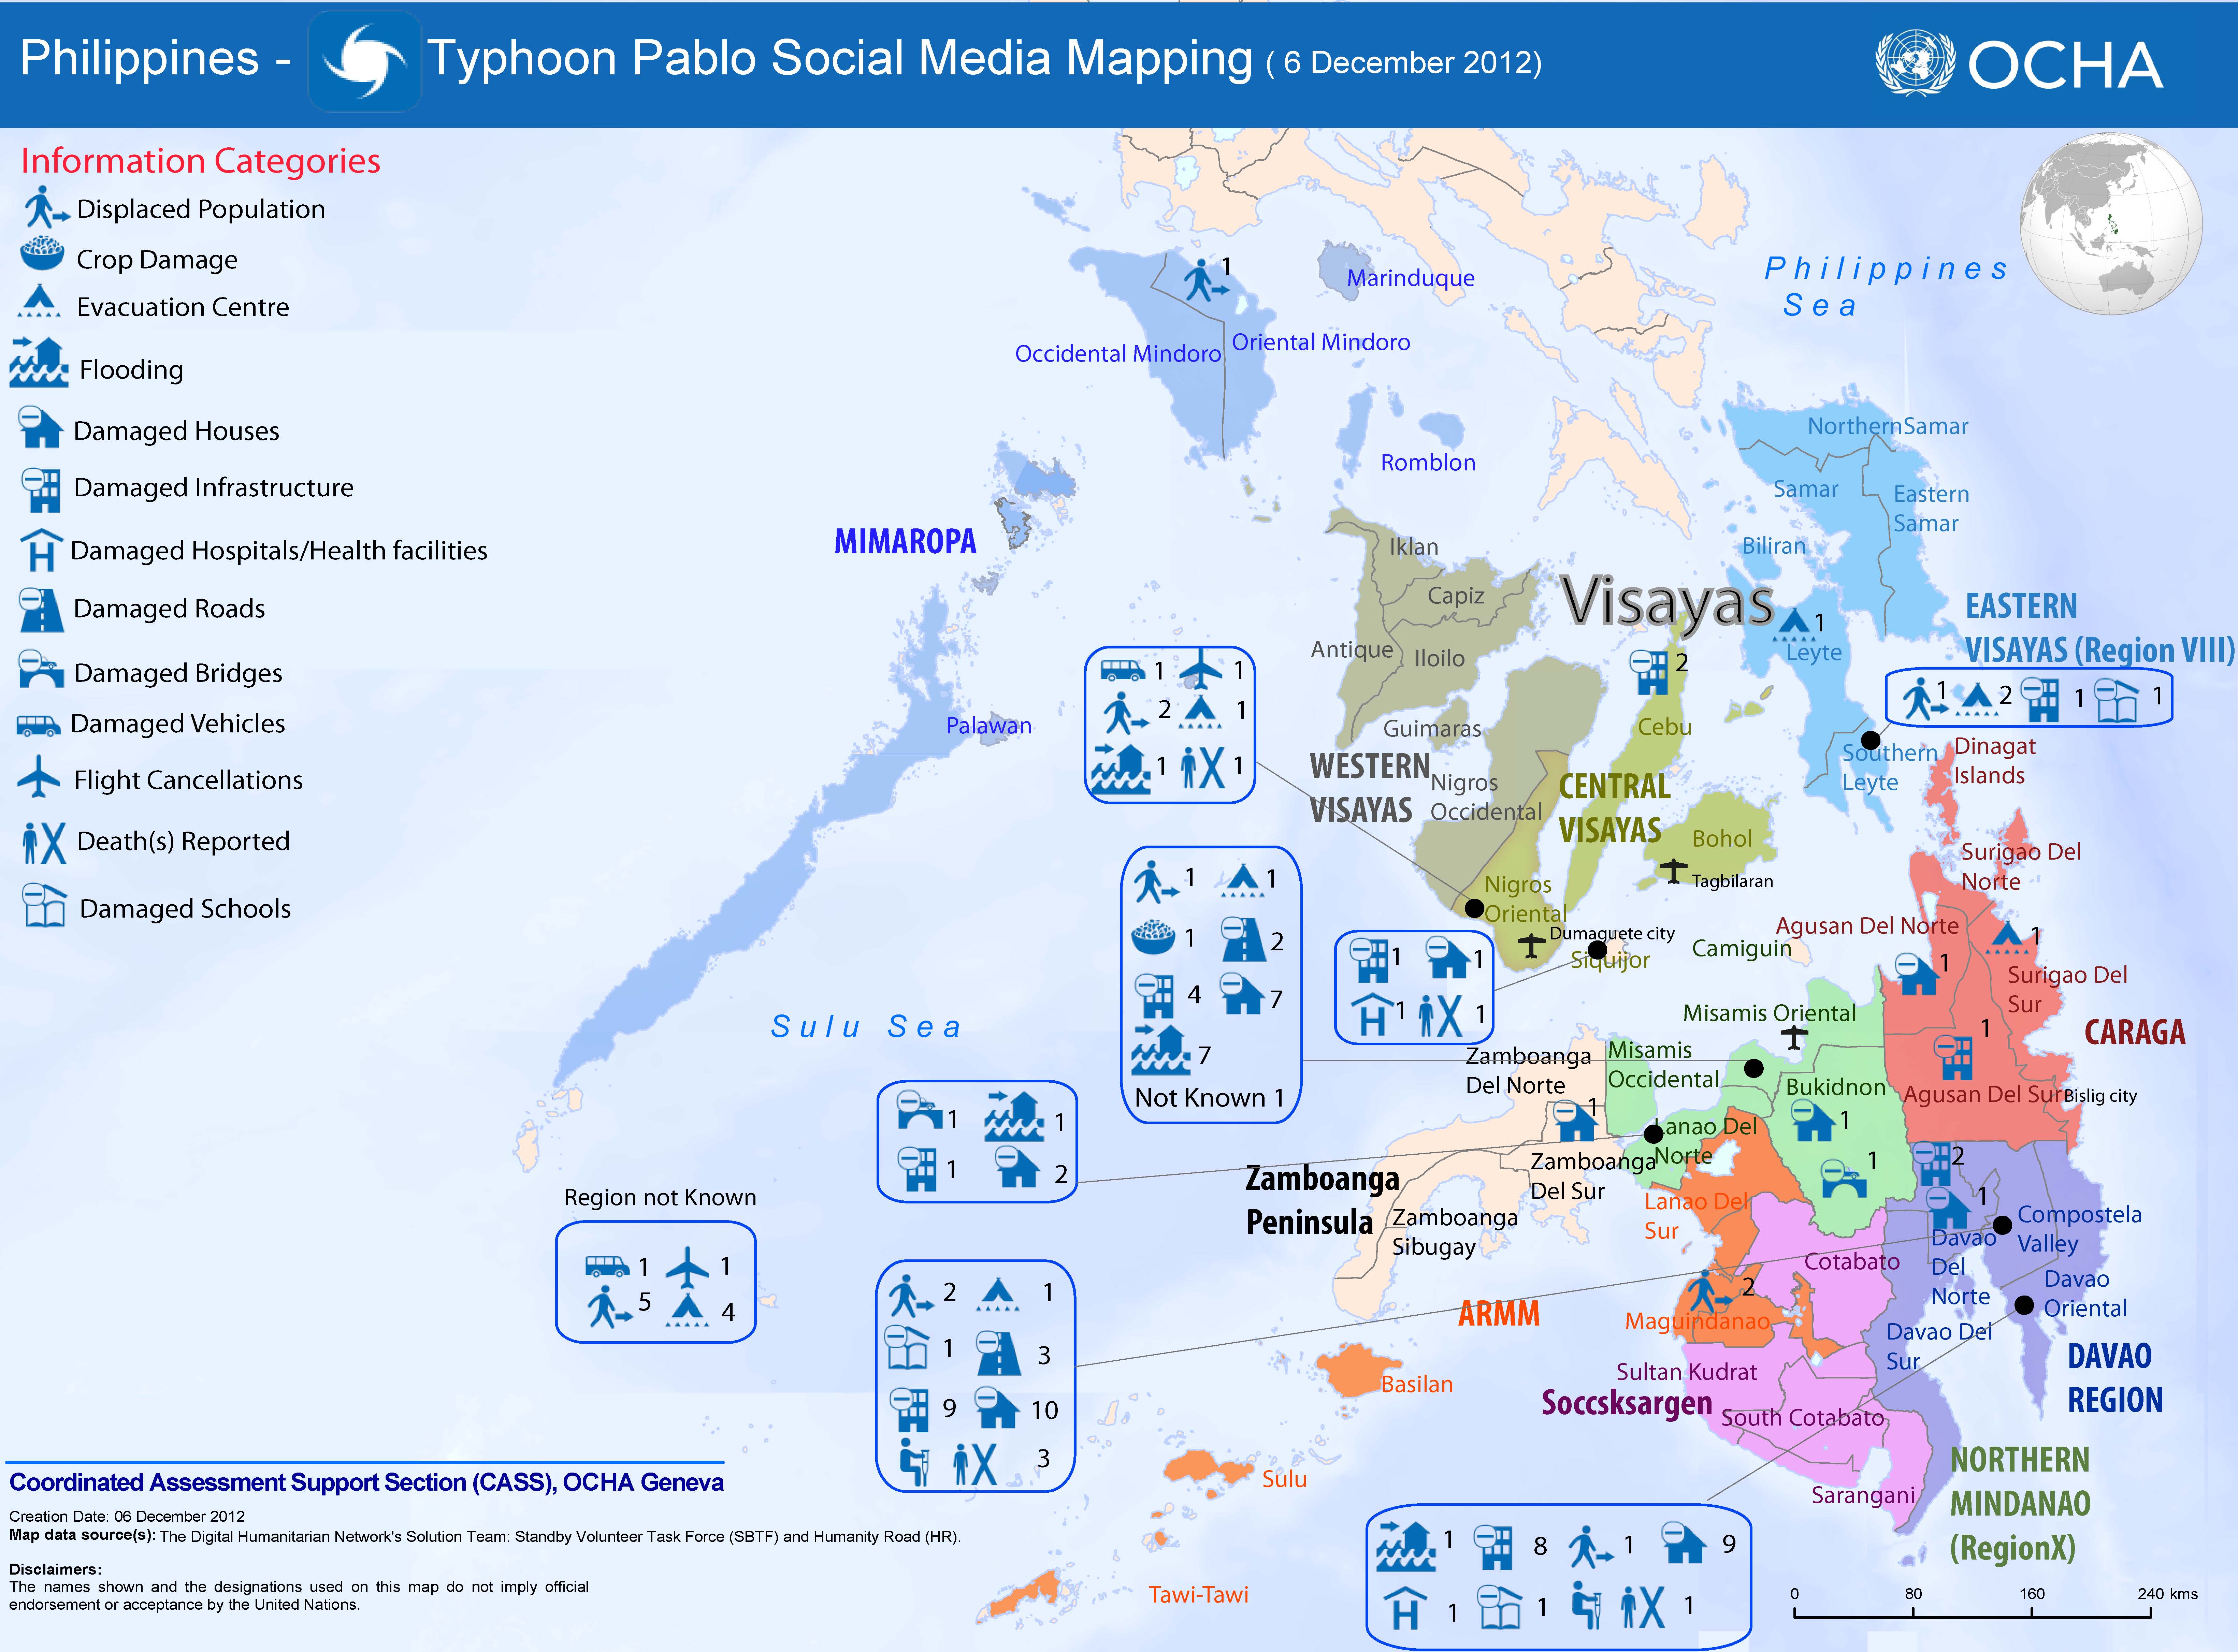 Typhon PABLO_Social_Media_Mapping-OCHA_A4_Portrait_6Dec2012